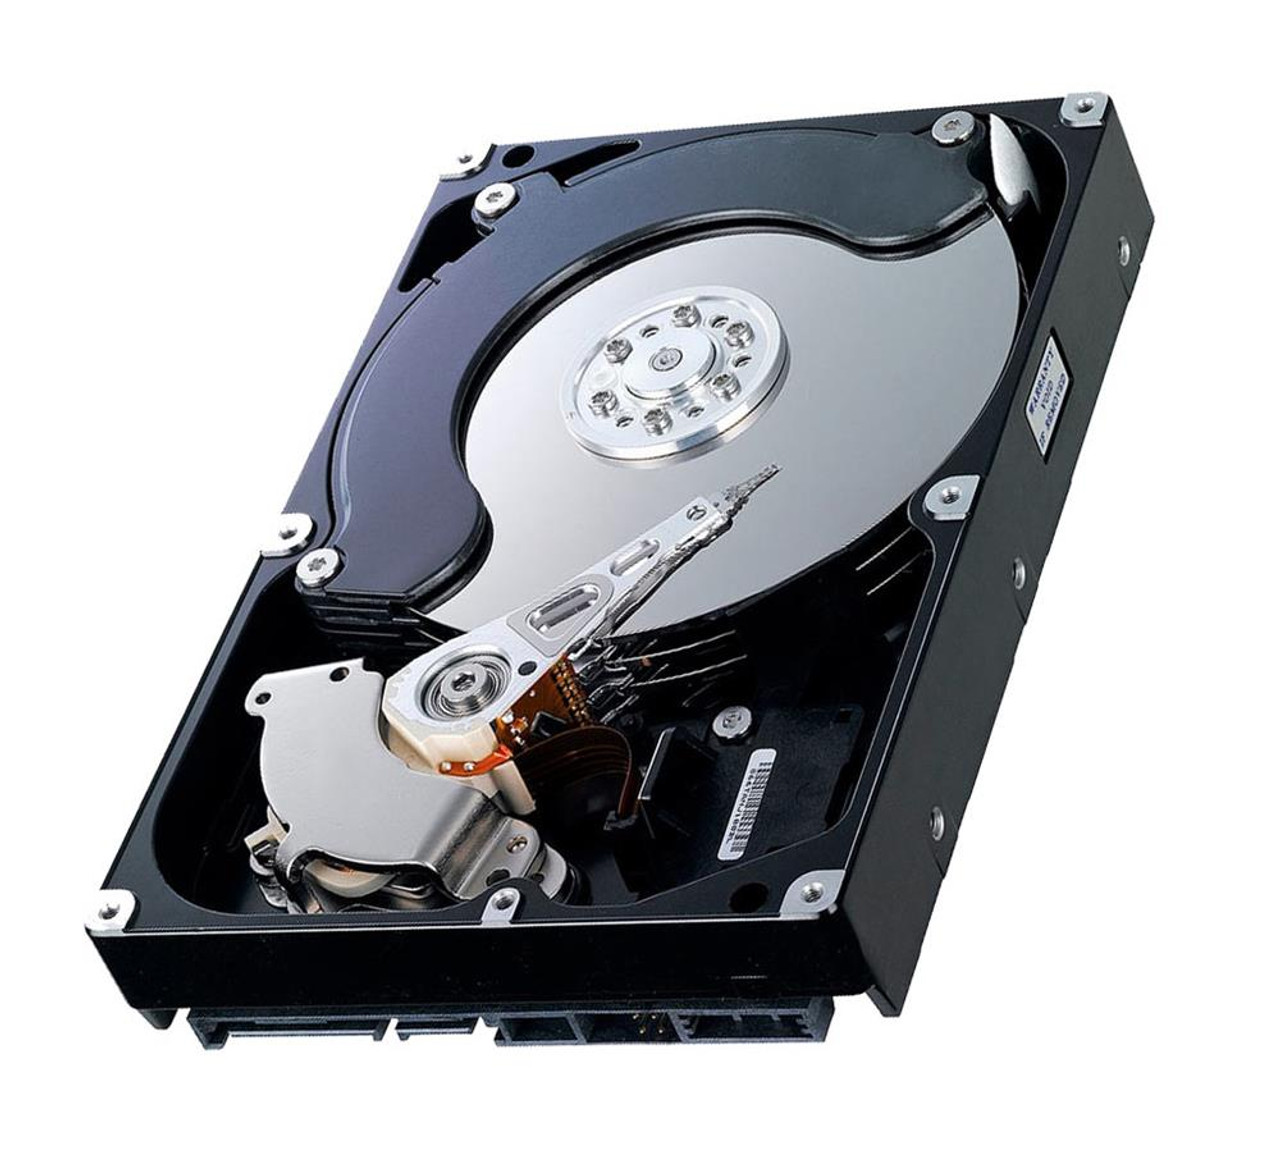 WD170AA-60ANA0 - Western Digital Caviar 17GB 5400RPM ATA-66 2MB Cache 3.5-inch Hard Disk Drive